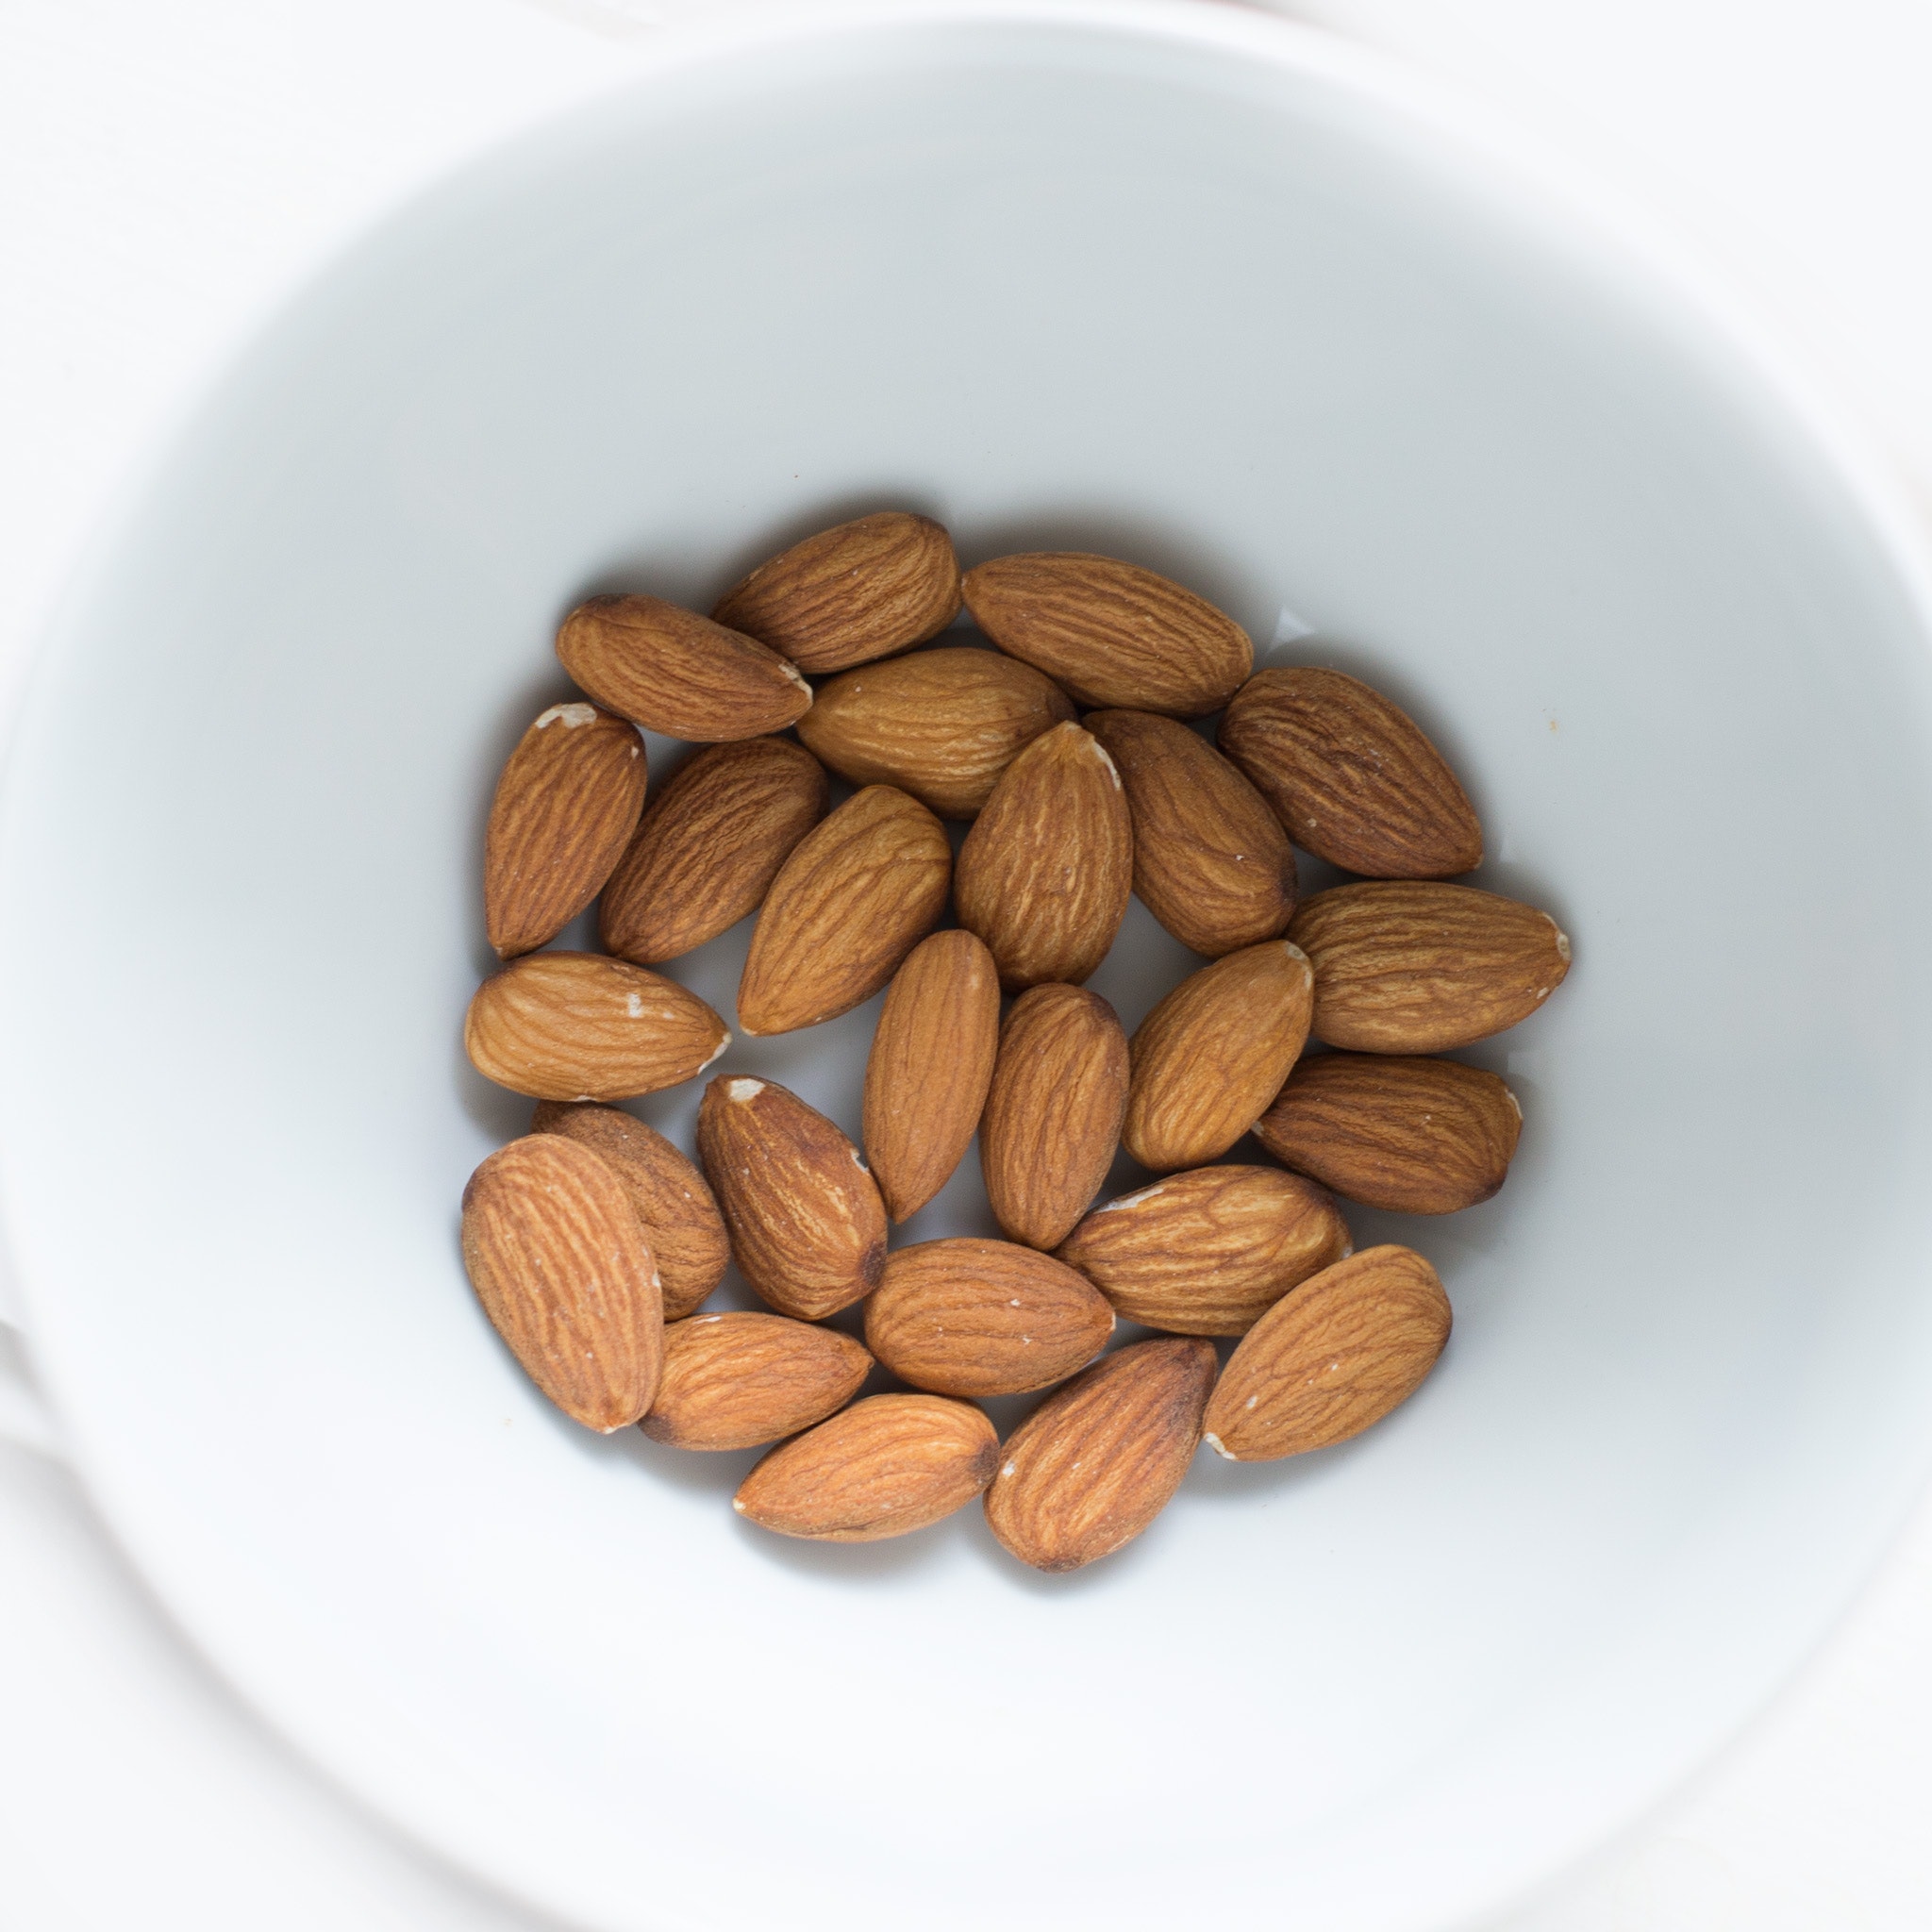 almond-almonds-food-57042.jpg